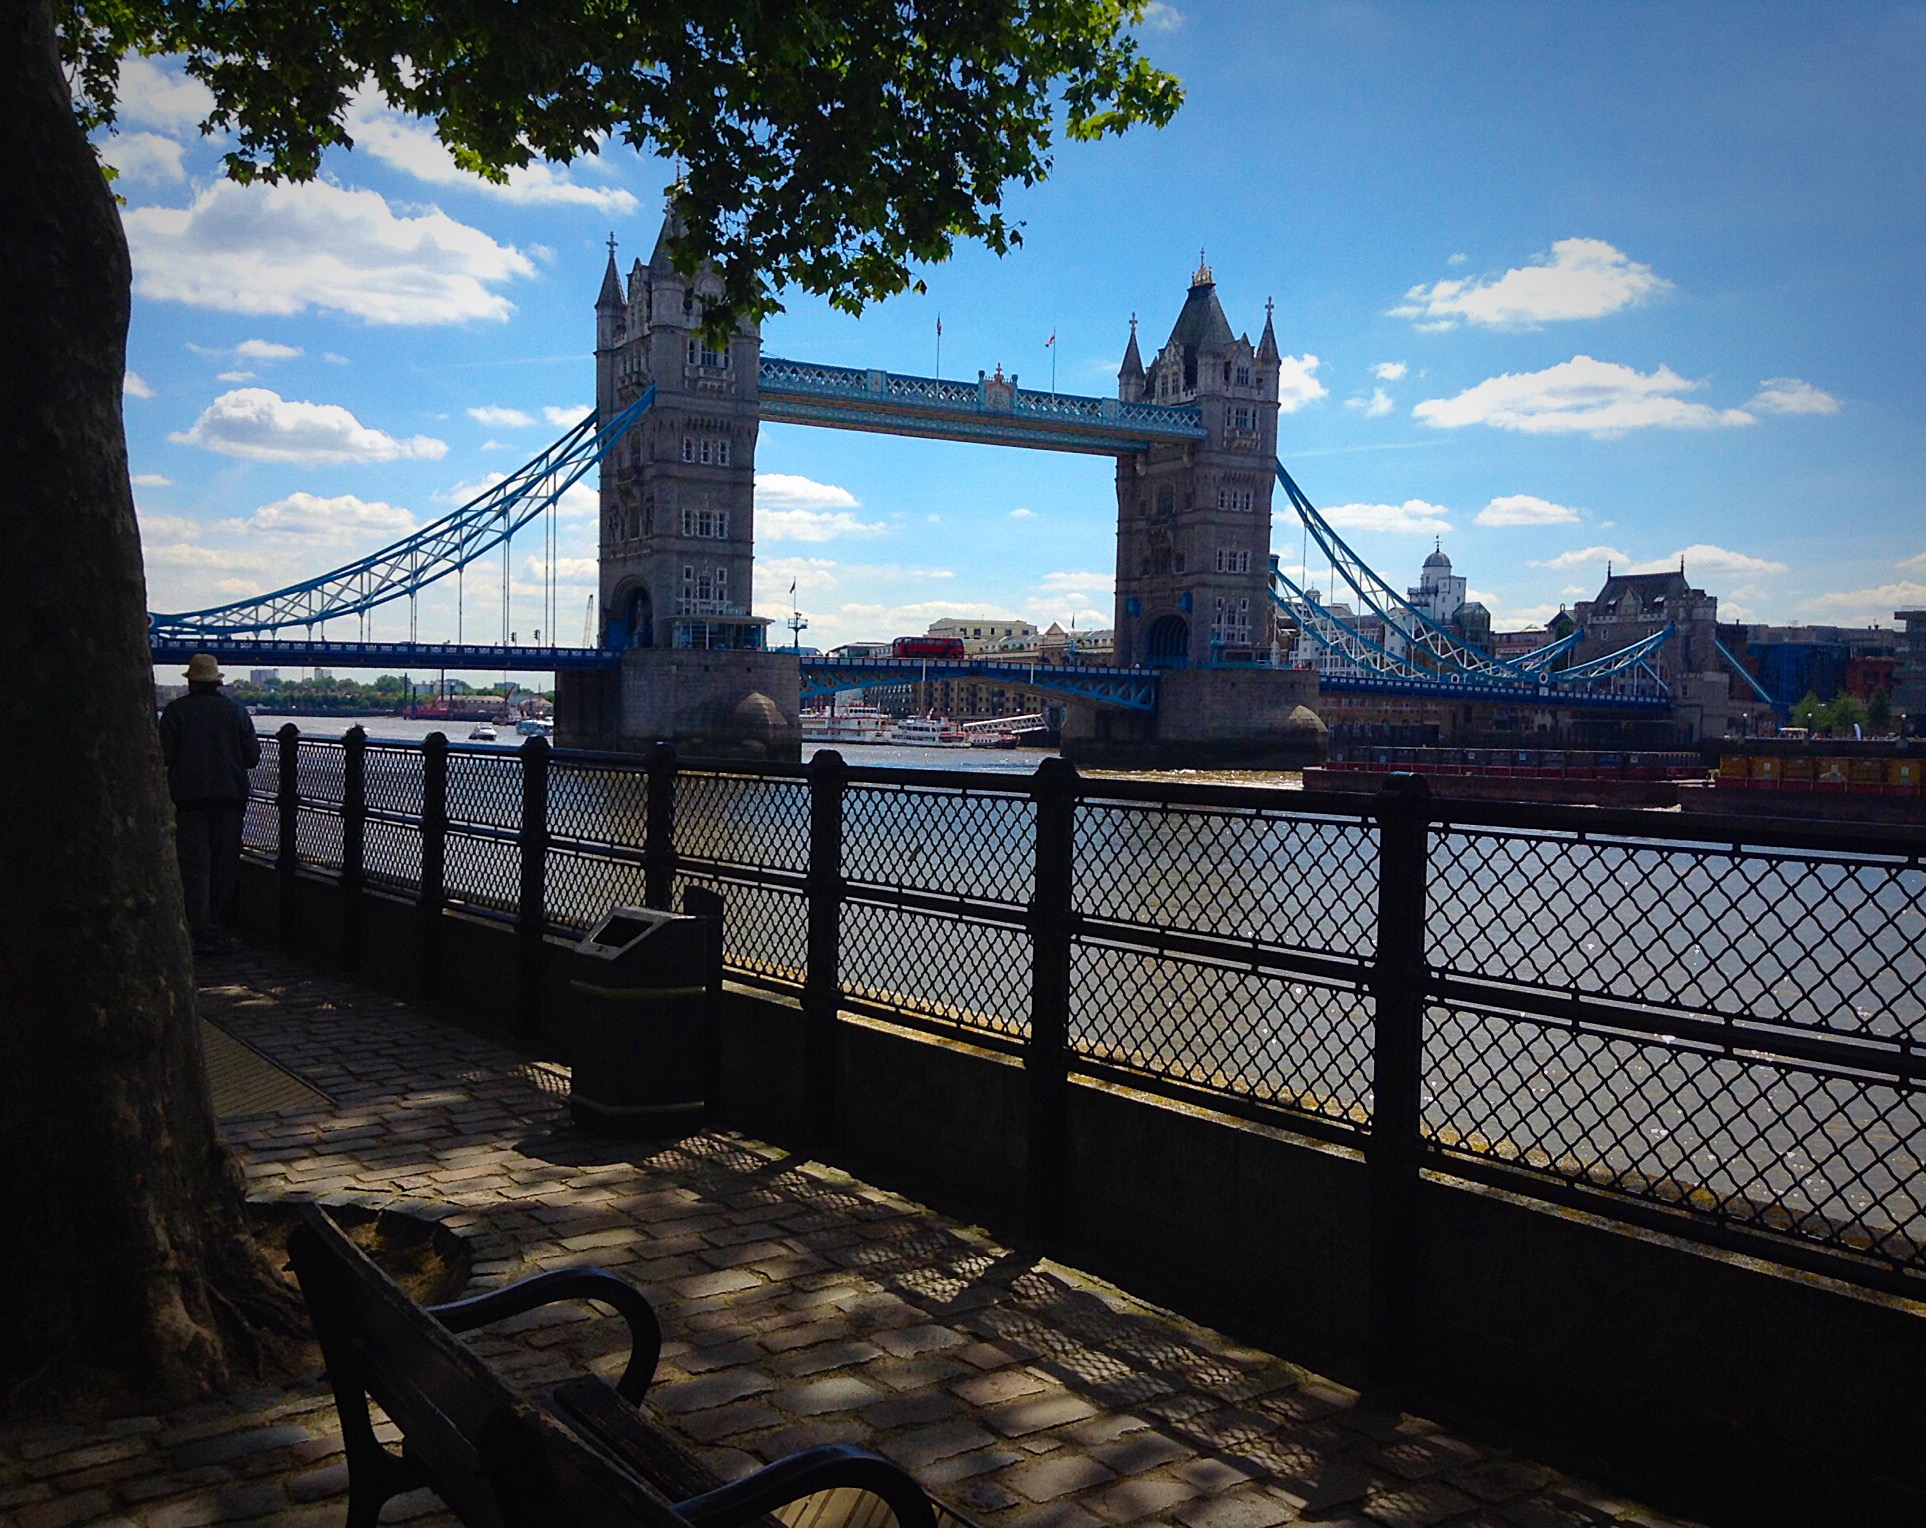 Free Walk Across London’s Tower Bridge